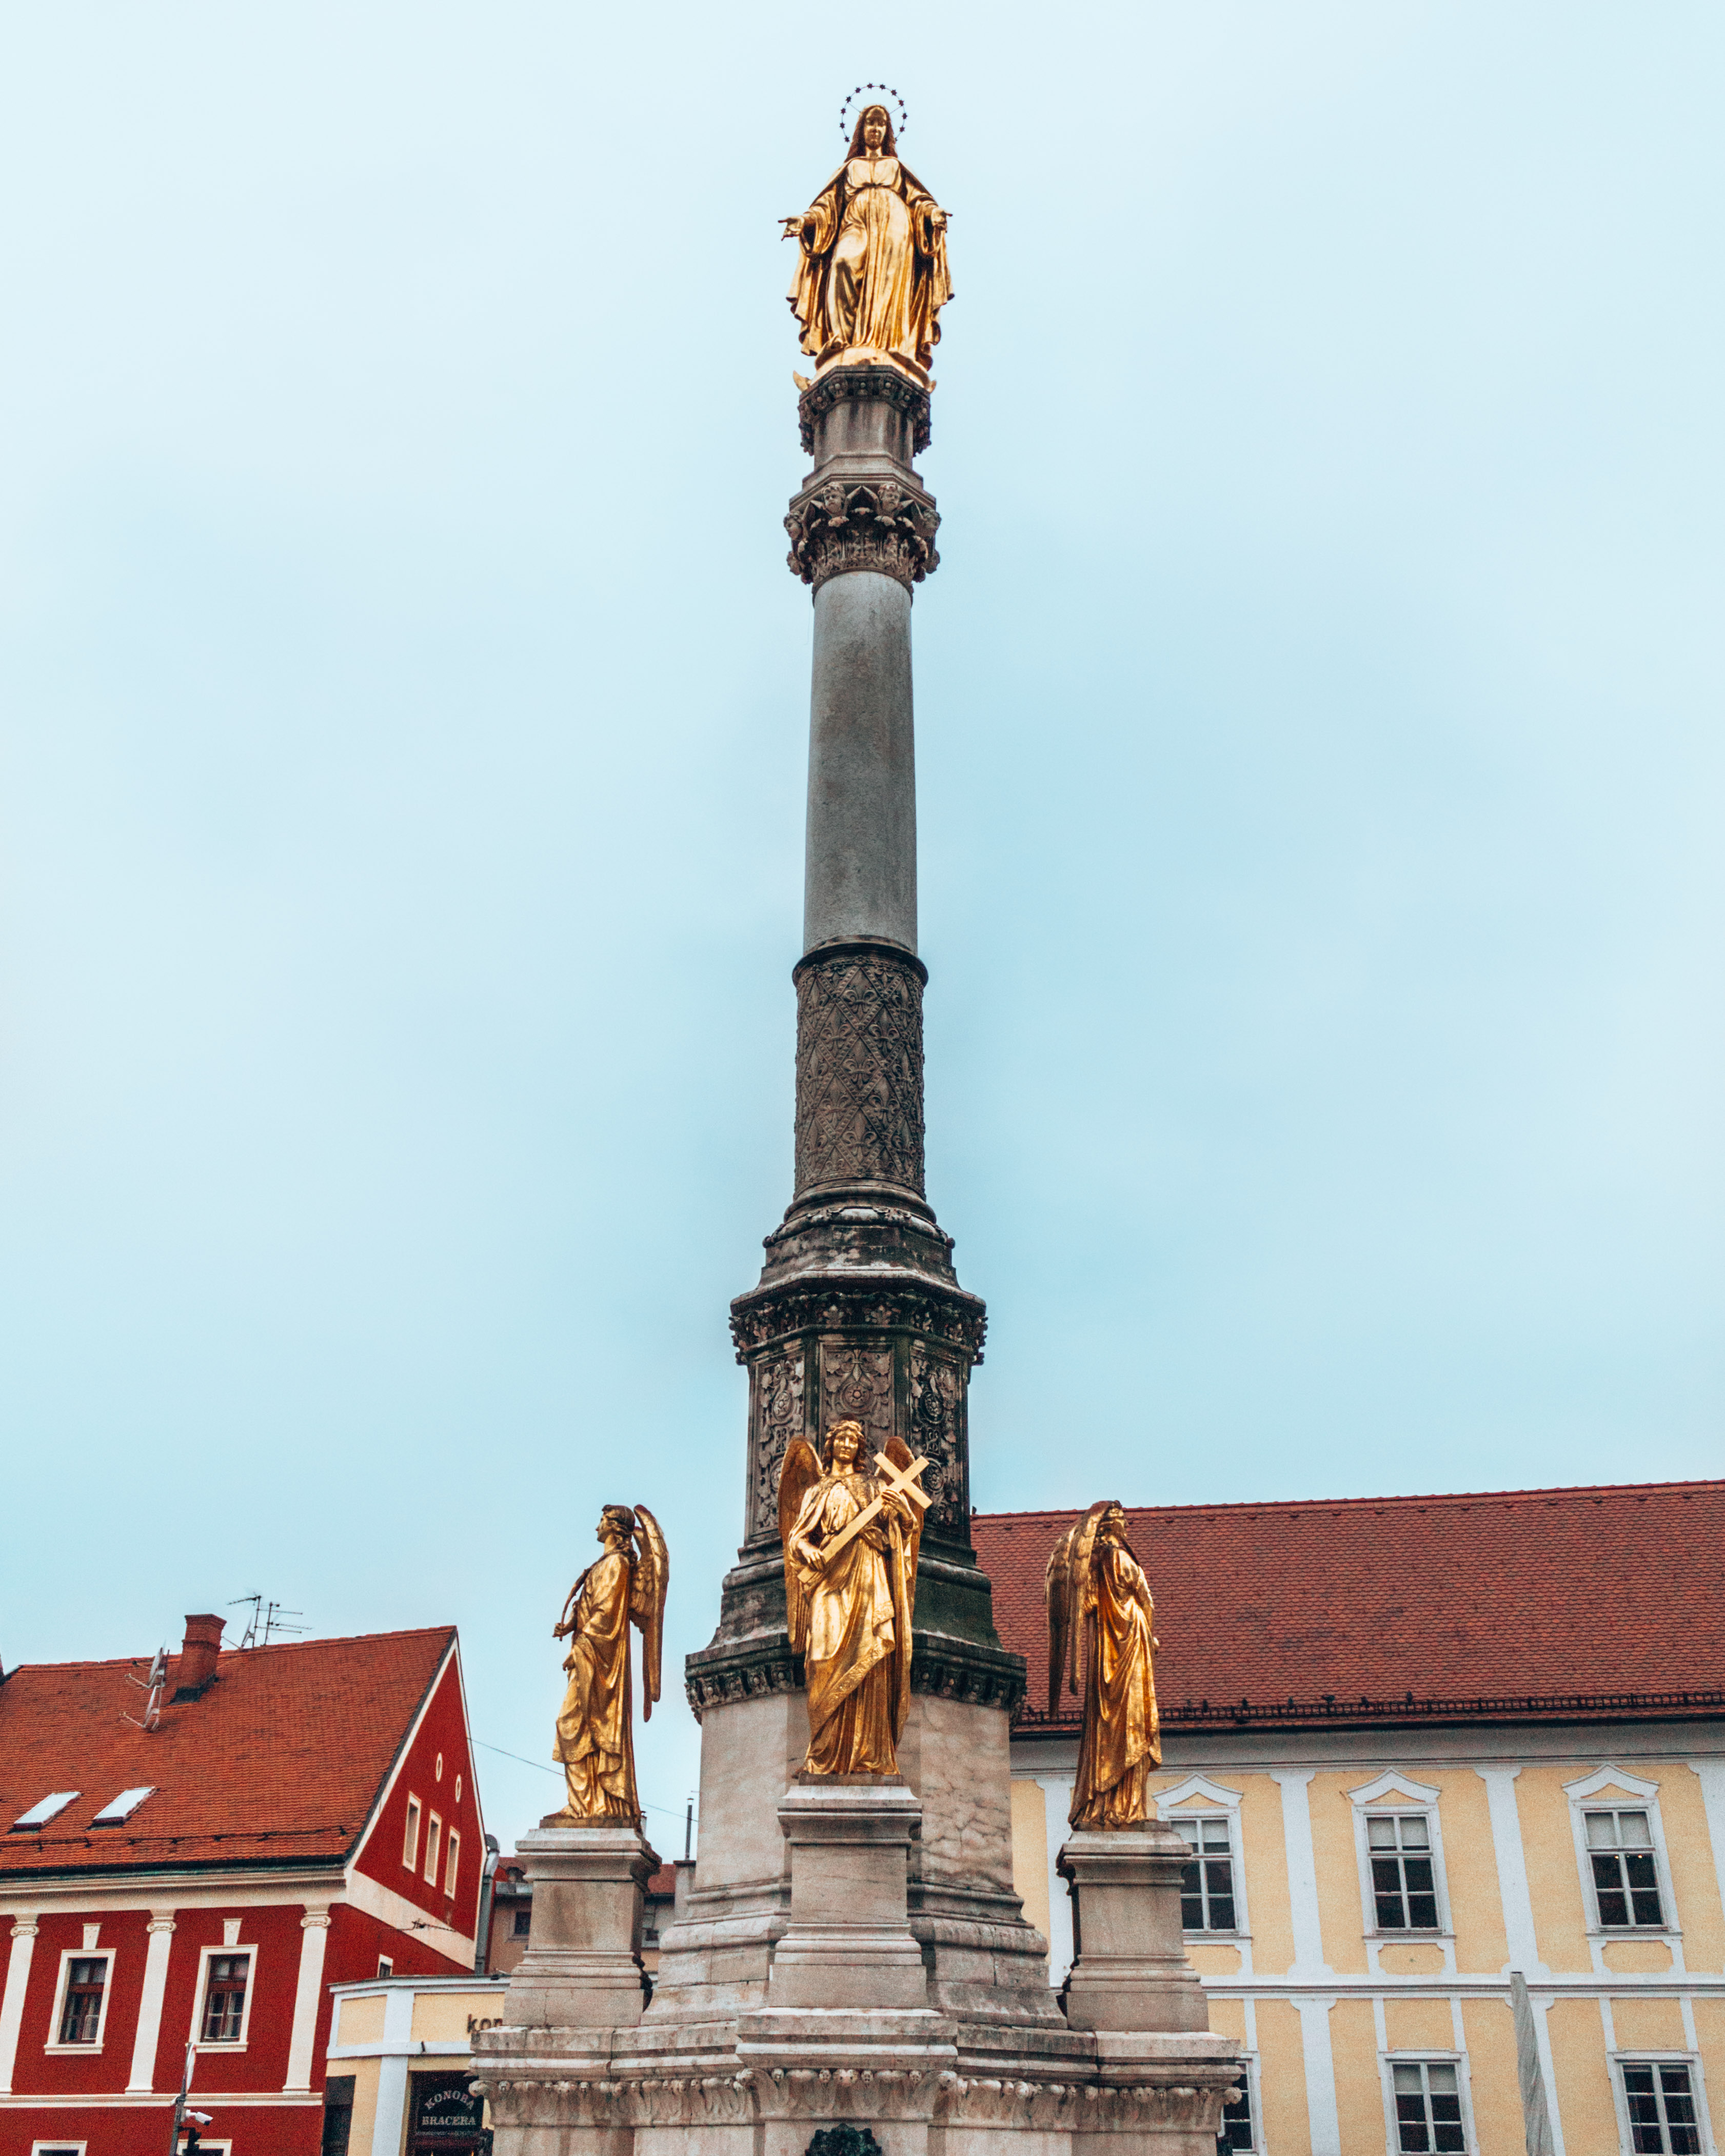 The Virgin Mary monument in Zagreb, Croatia